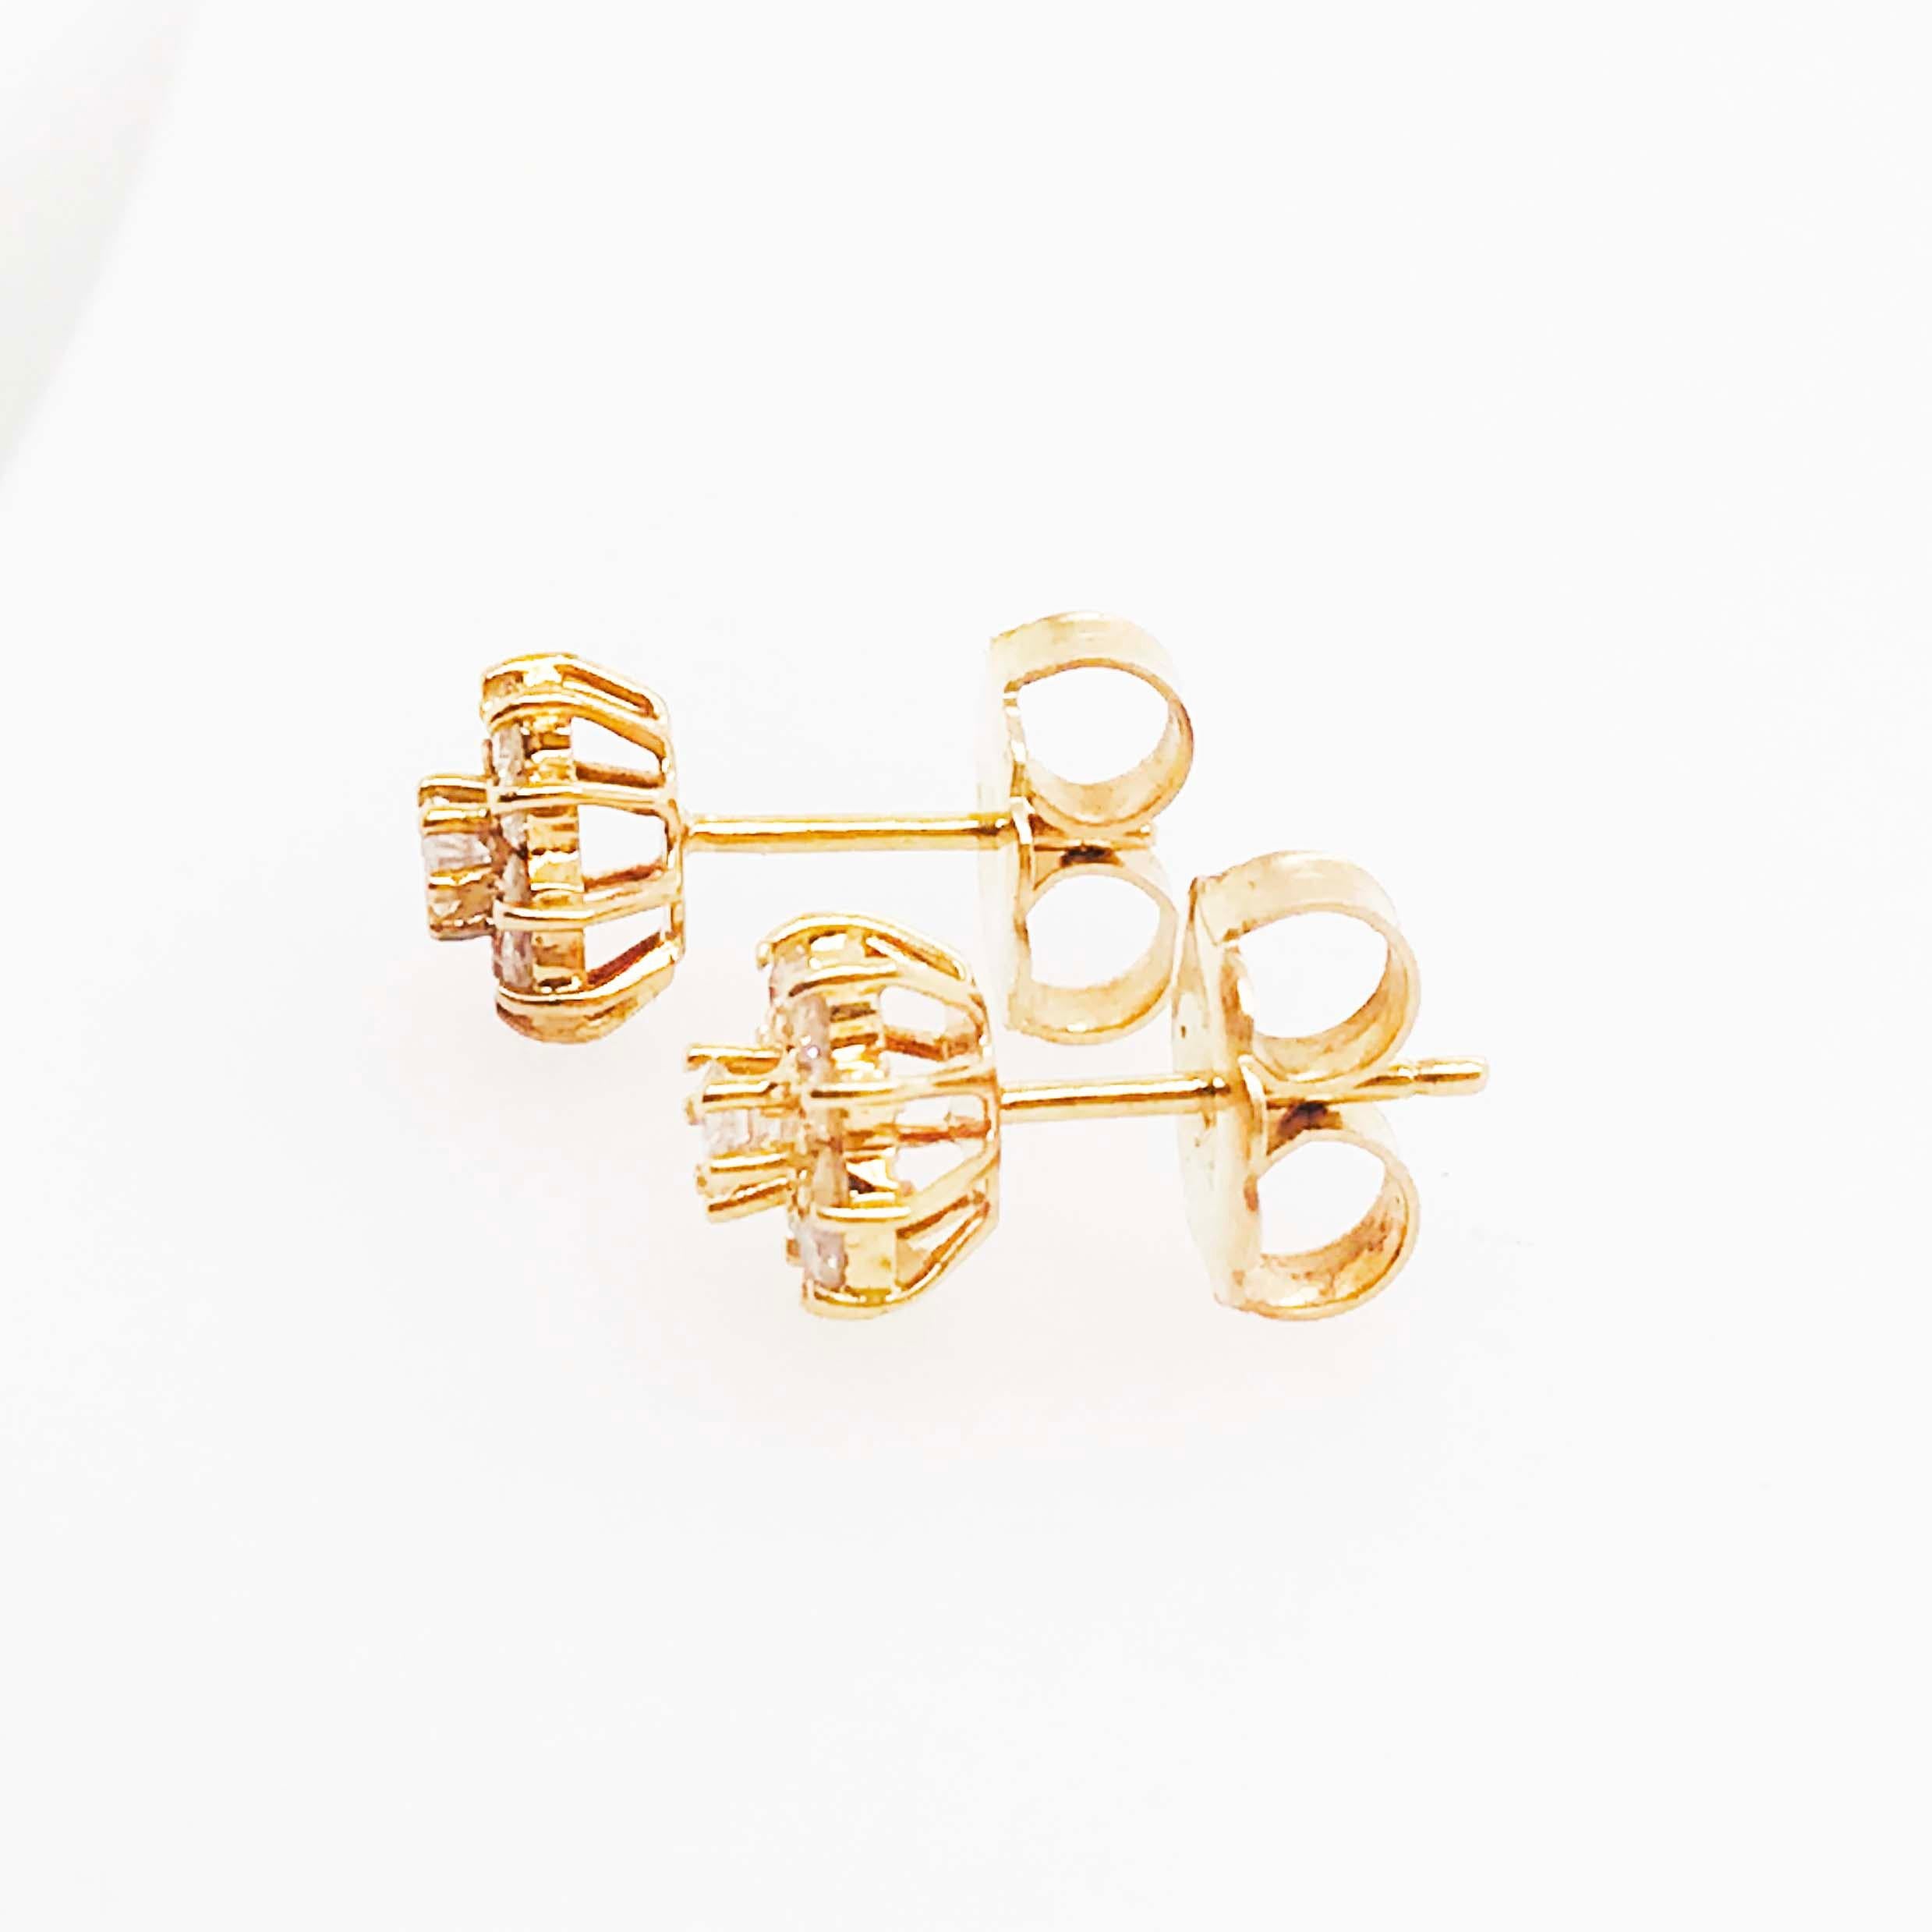 Round Cut Diamond Cluster Earrings, Diamond and Diamond Halo Earring Studs in Yellow Gold